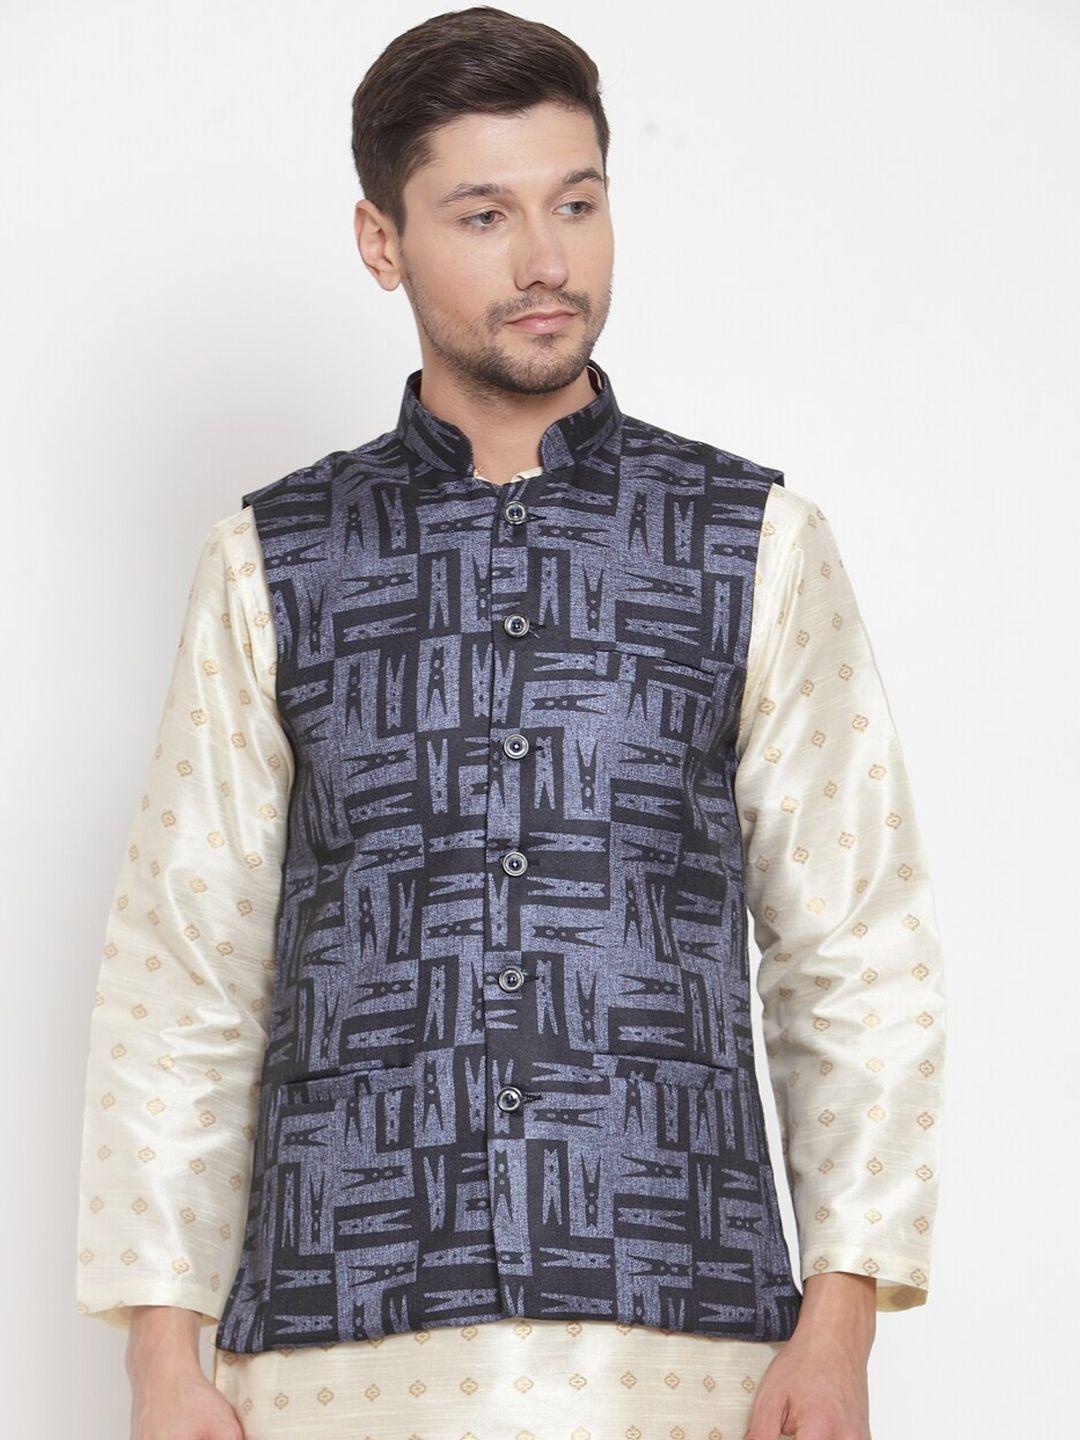 klotthe-men-charcoal-black-&-grey-woven-design-wool-blend-nehru-jacket